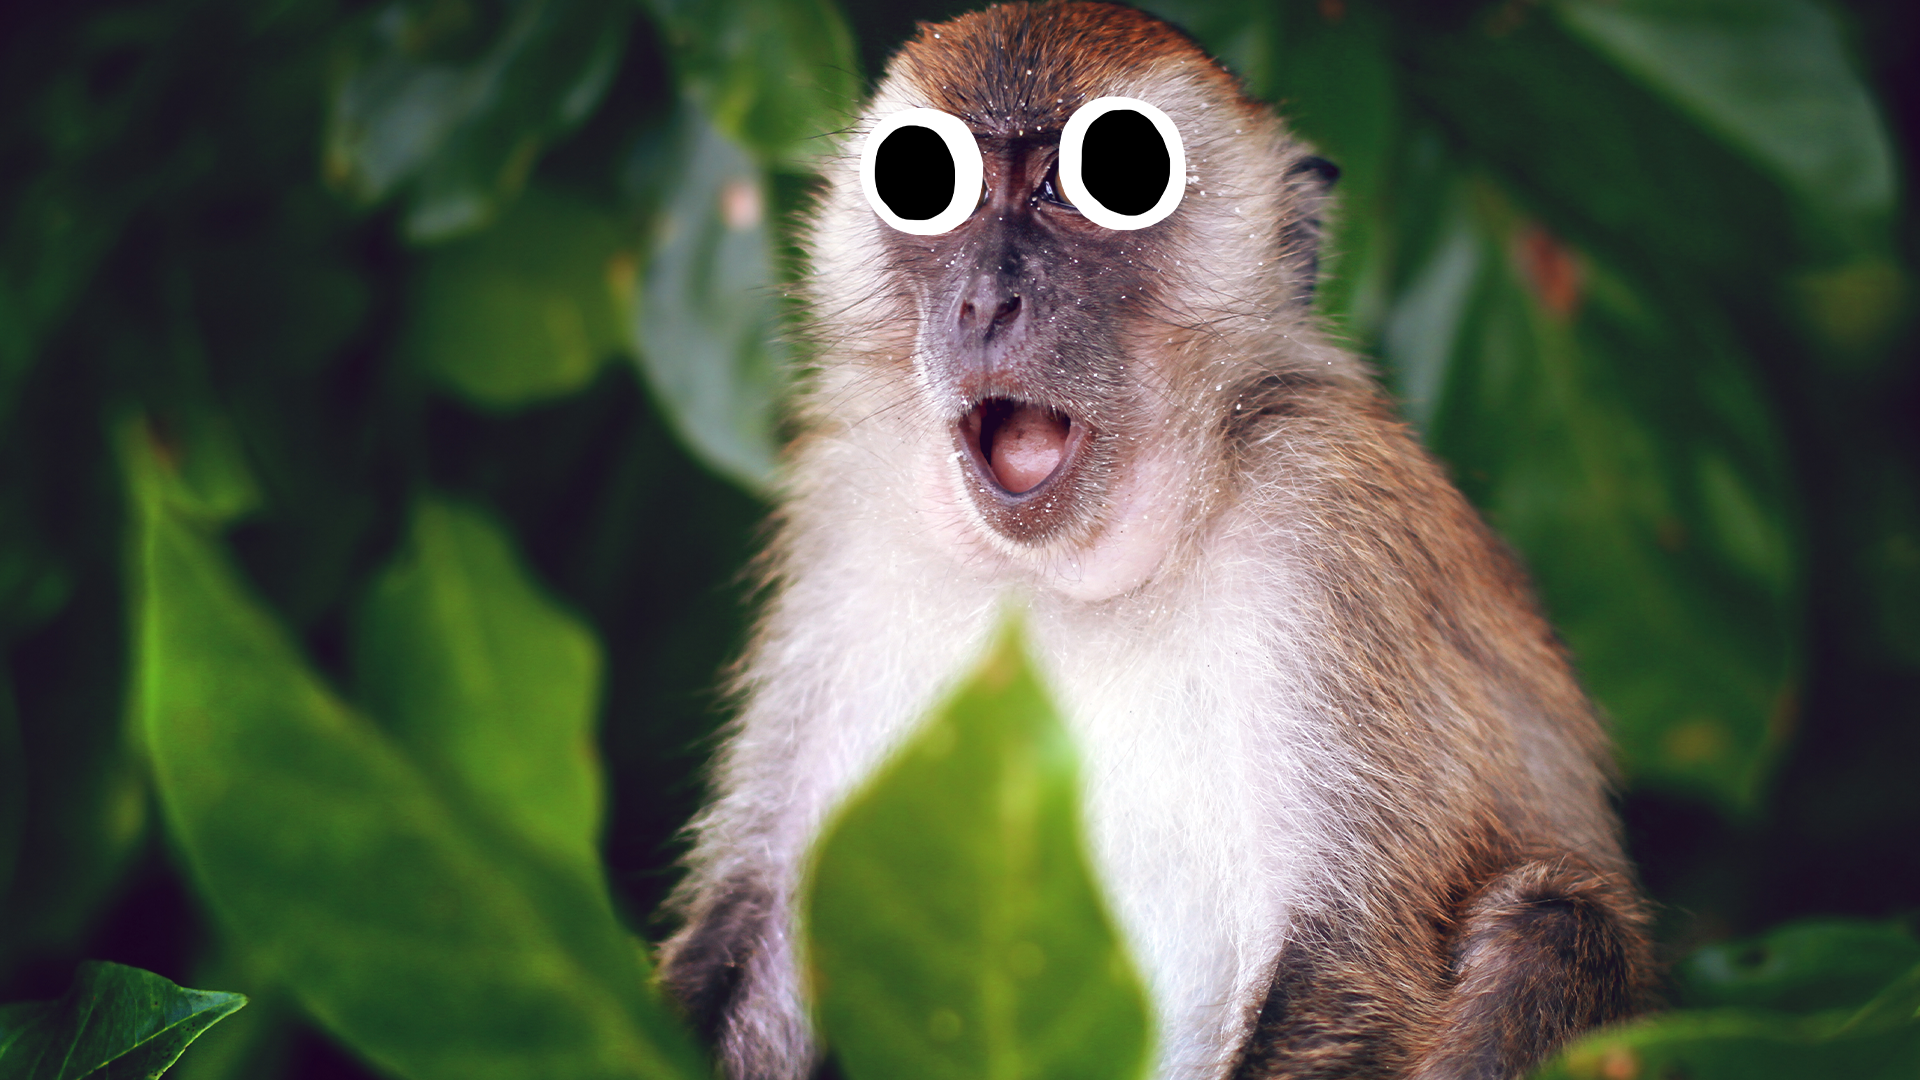 Surprised monkey